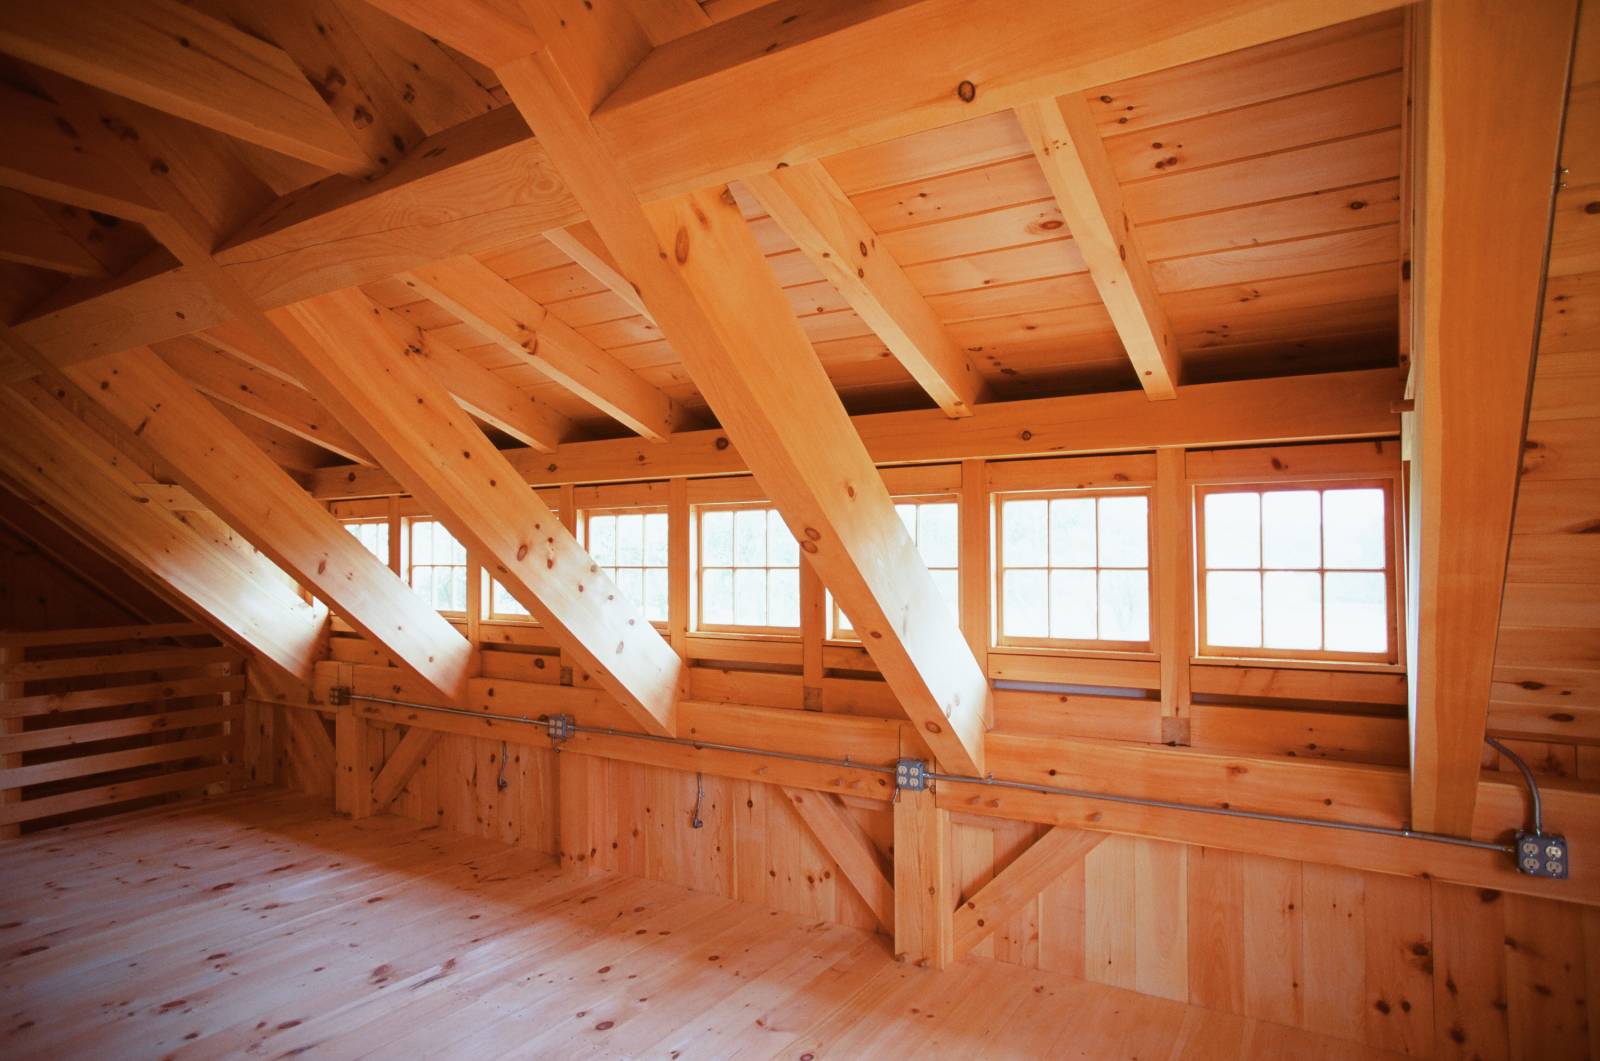 Inside showing the timber frame transom dormer